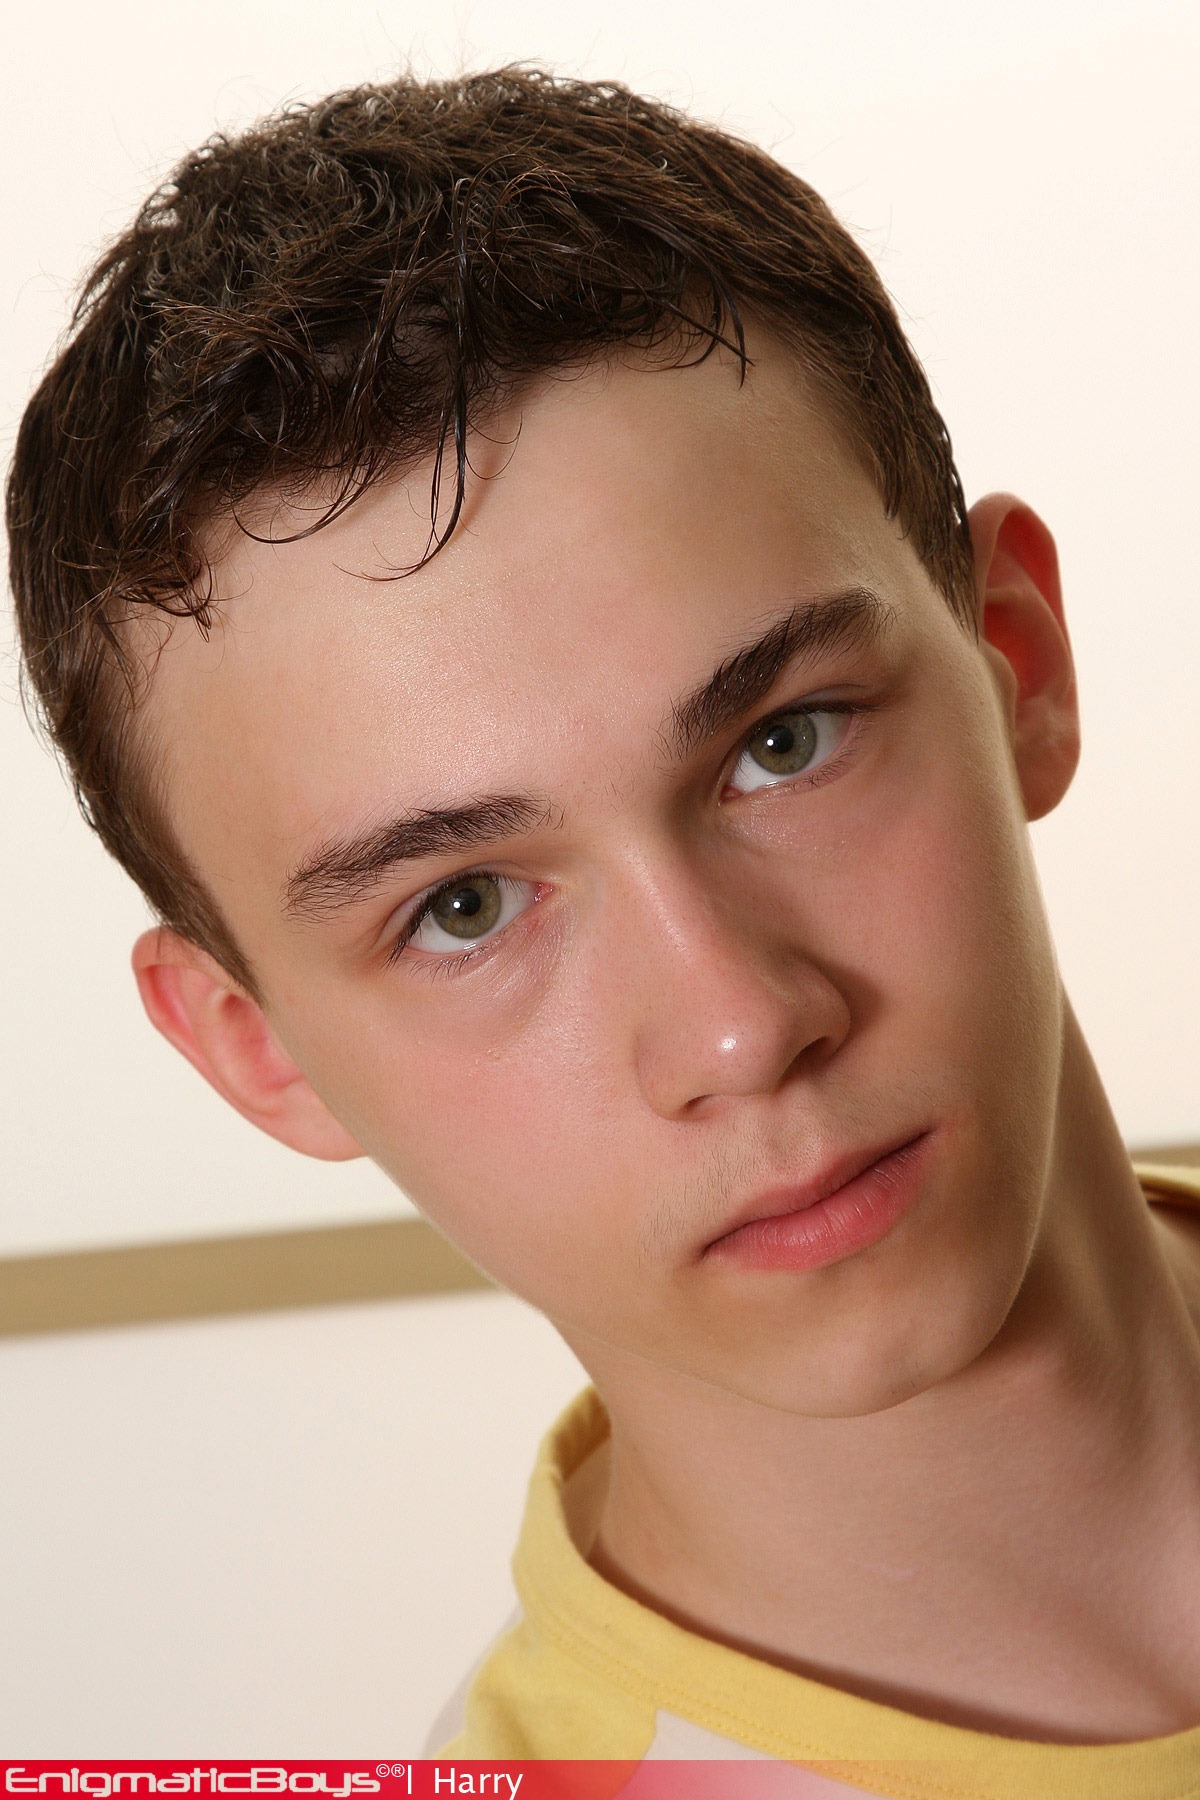 harry is a new gay teen star at enigmatic boys gay teen boys 1